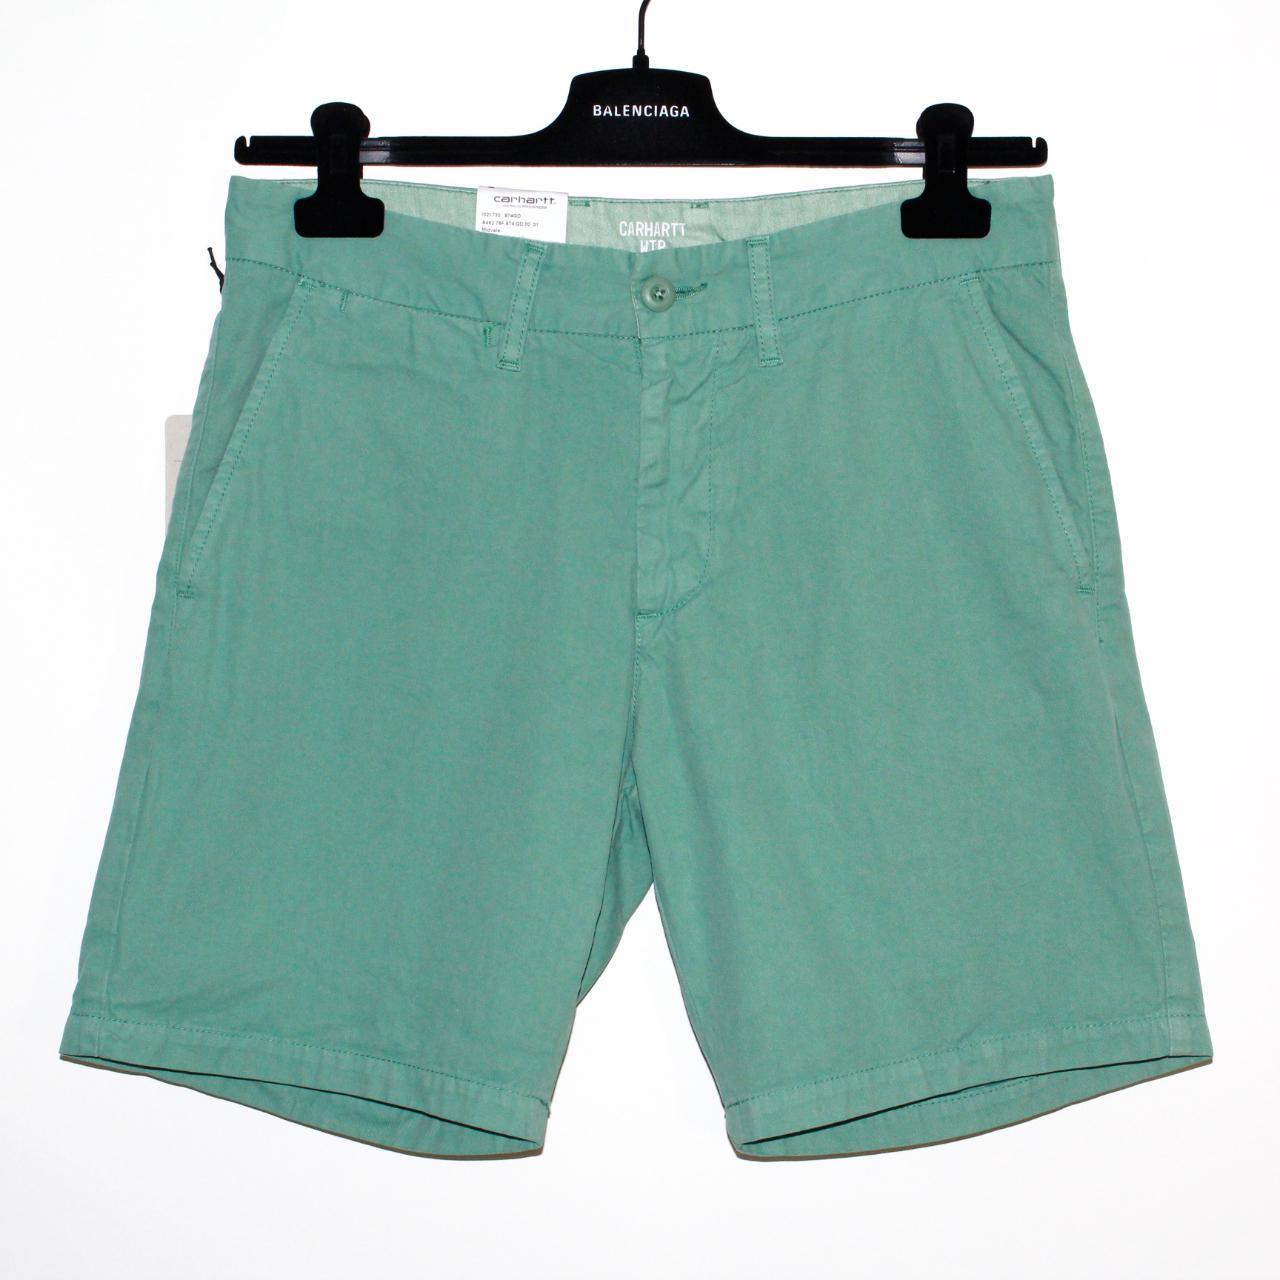 Product Image 1 - Carhartt WIP "John Short"

These shorts